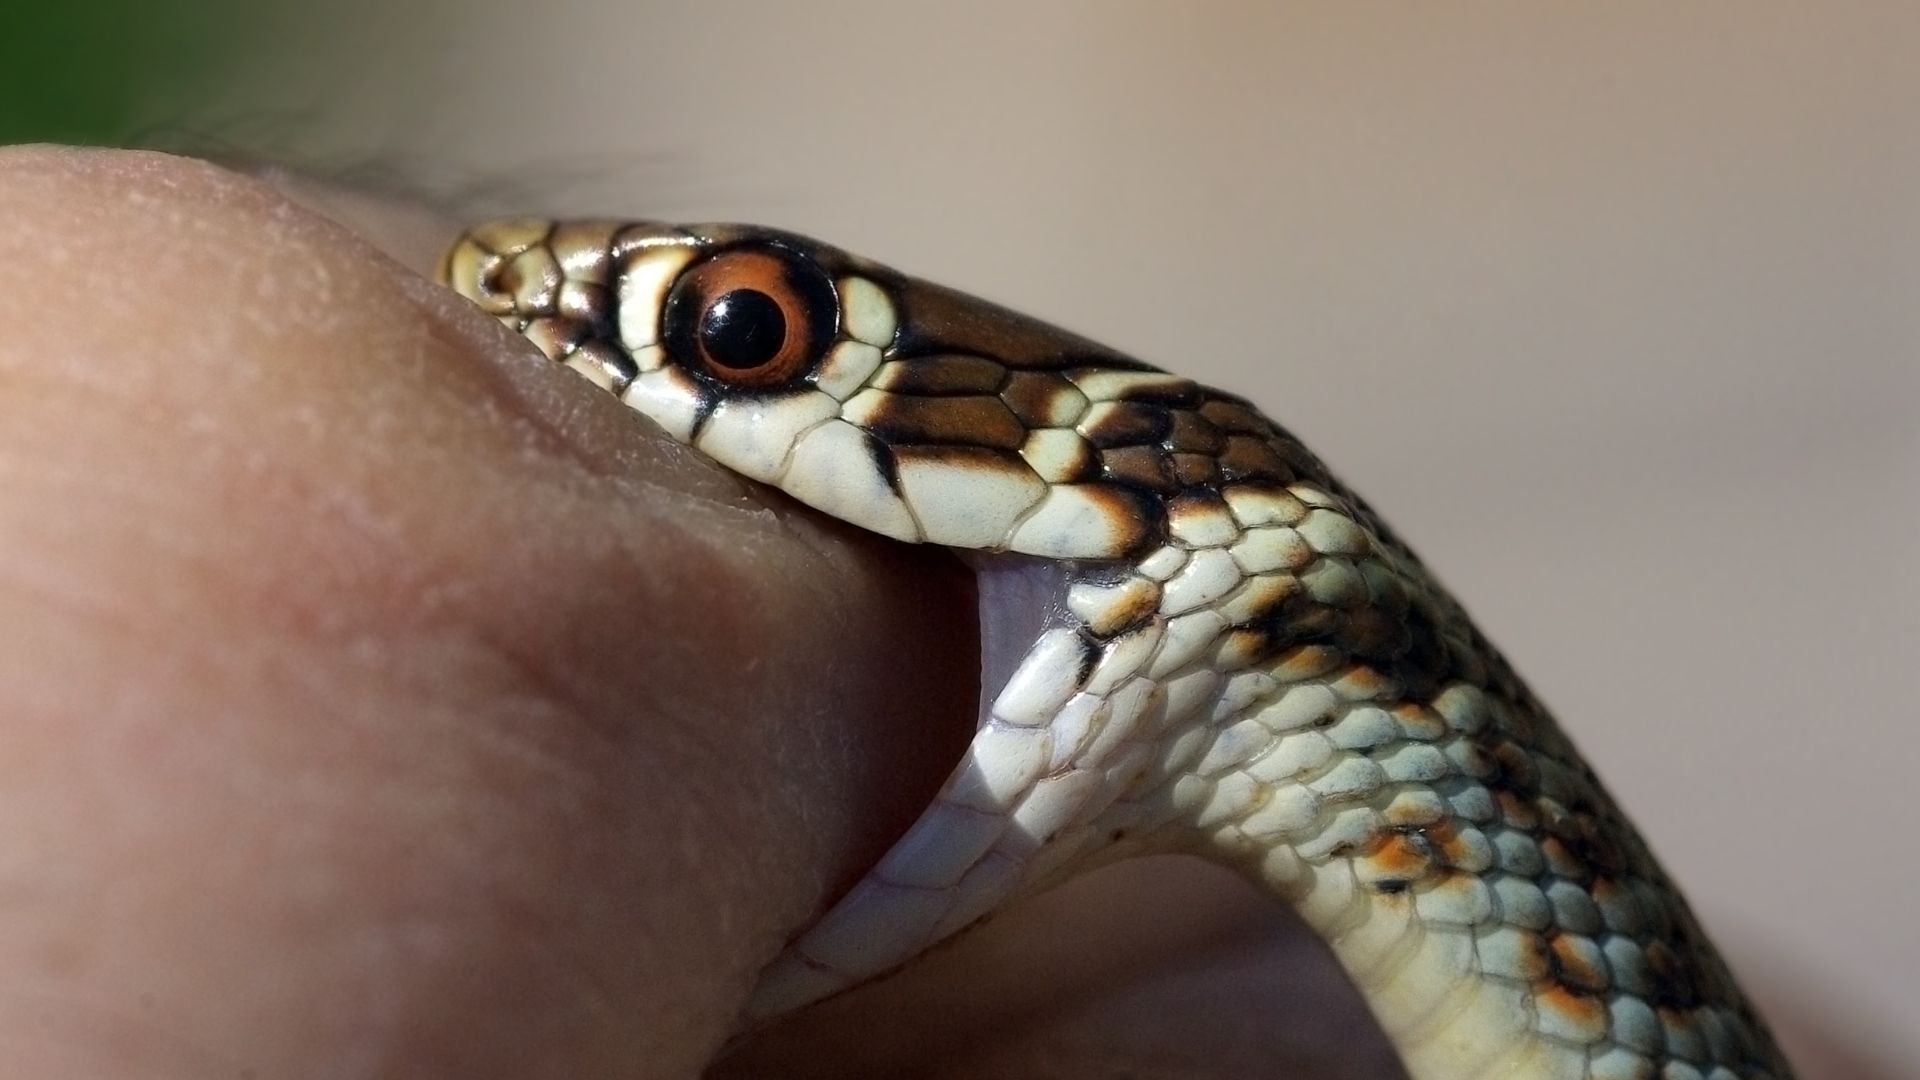 White And Brown Snake Biting Human Hand